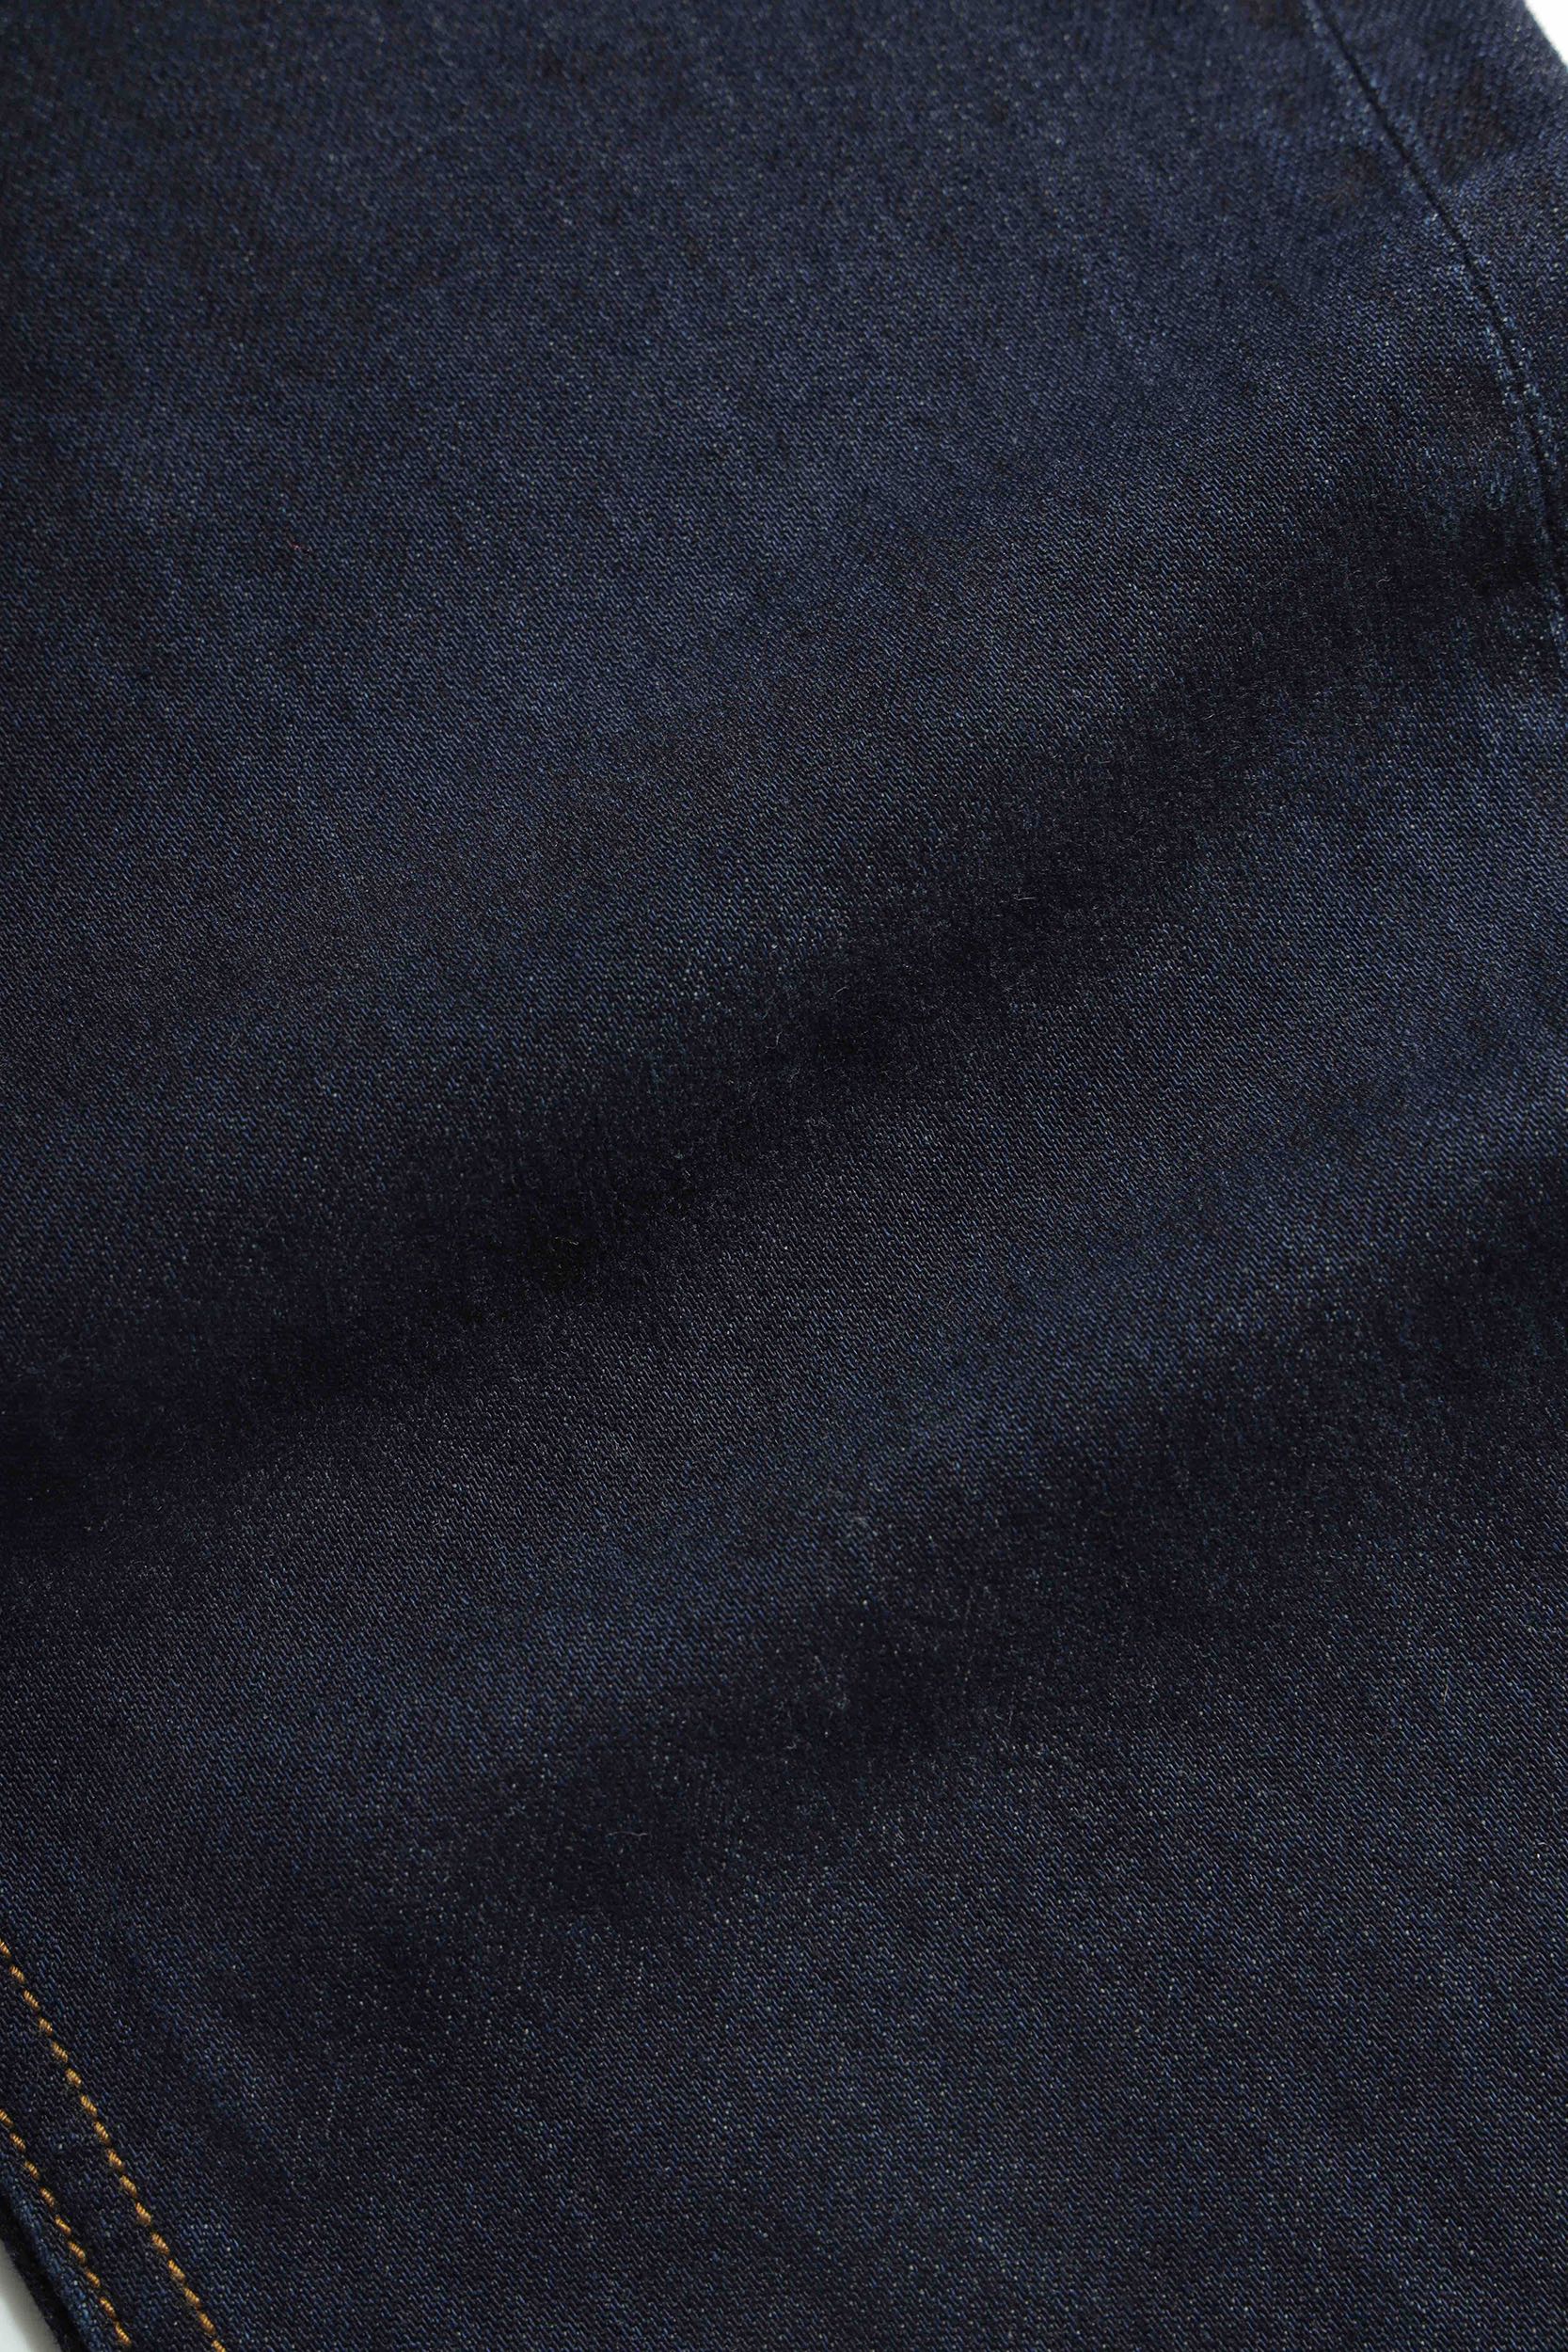 11.47oz Rainbow Selvedge Denim Fabric For Ed80 Rainbow Selvedge Jeans Raw  Denim Fabric By The Yard W286425 - AliExpress